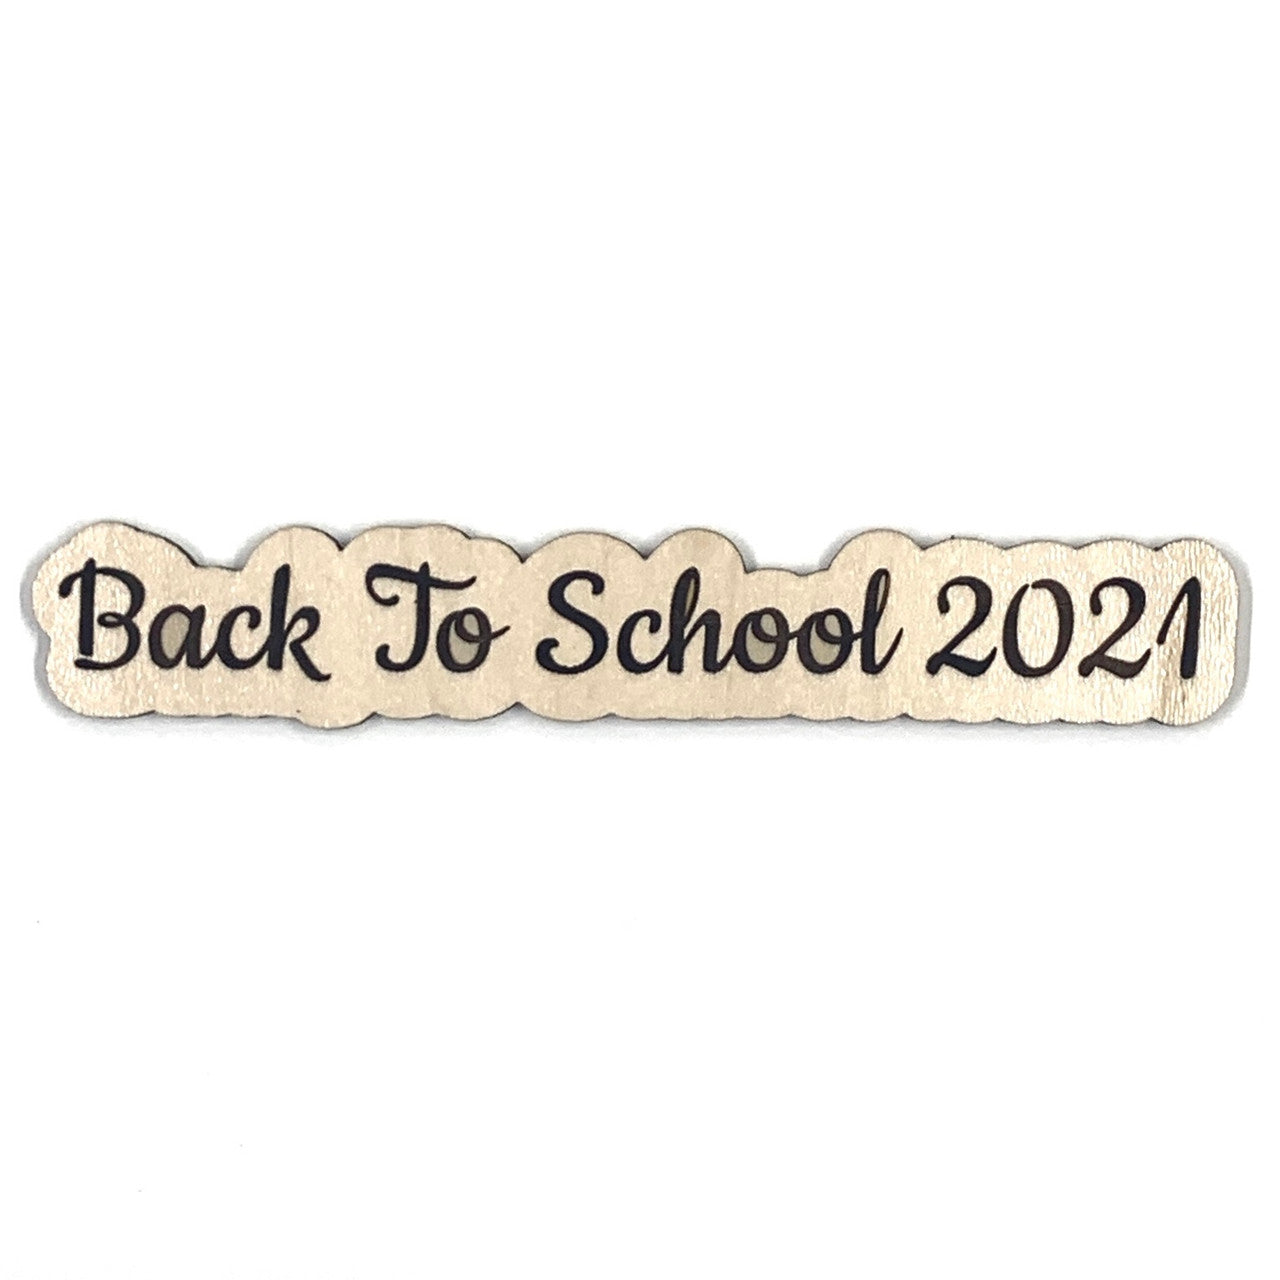 Back to School 2021 Wooden Embellishment